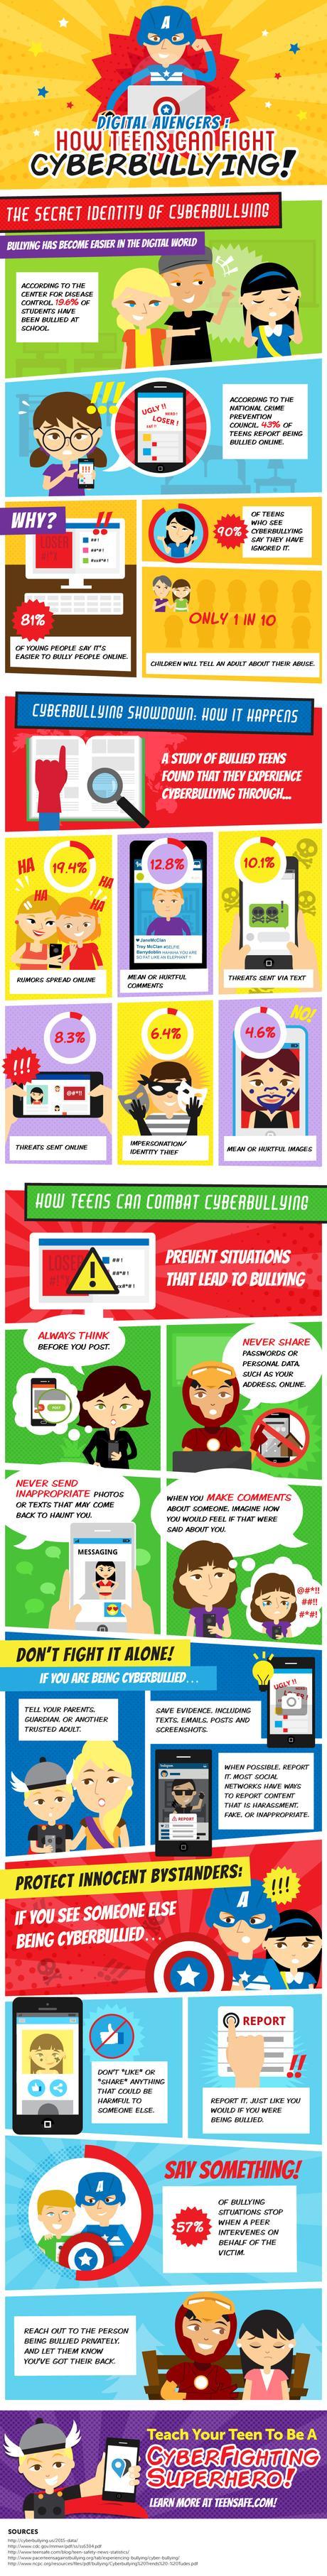 Cyberbullying. Raising Kids That Help Stop Bullies